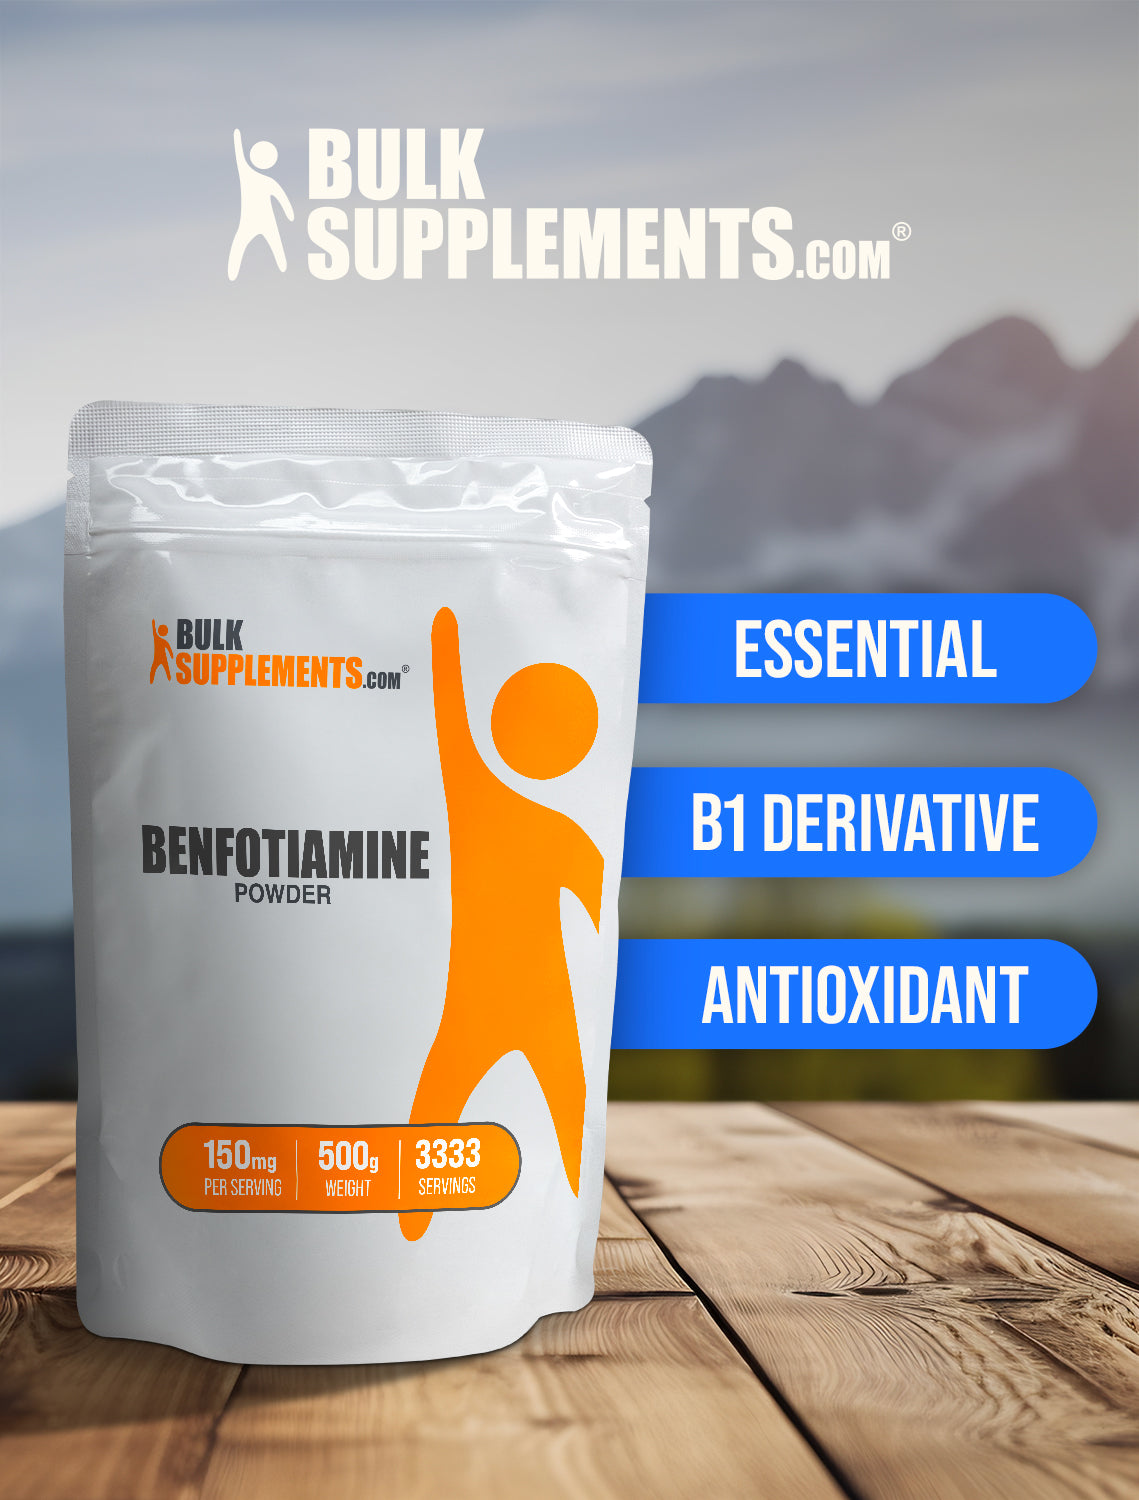 Benfotiamine powder label 500g